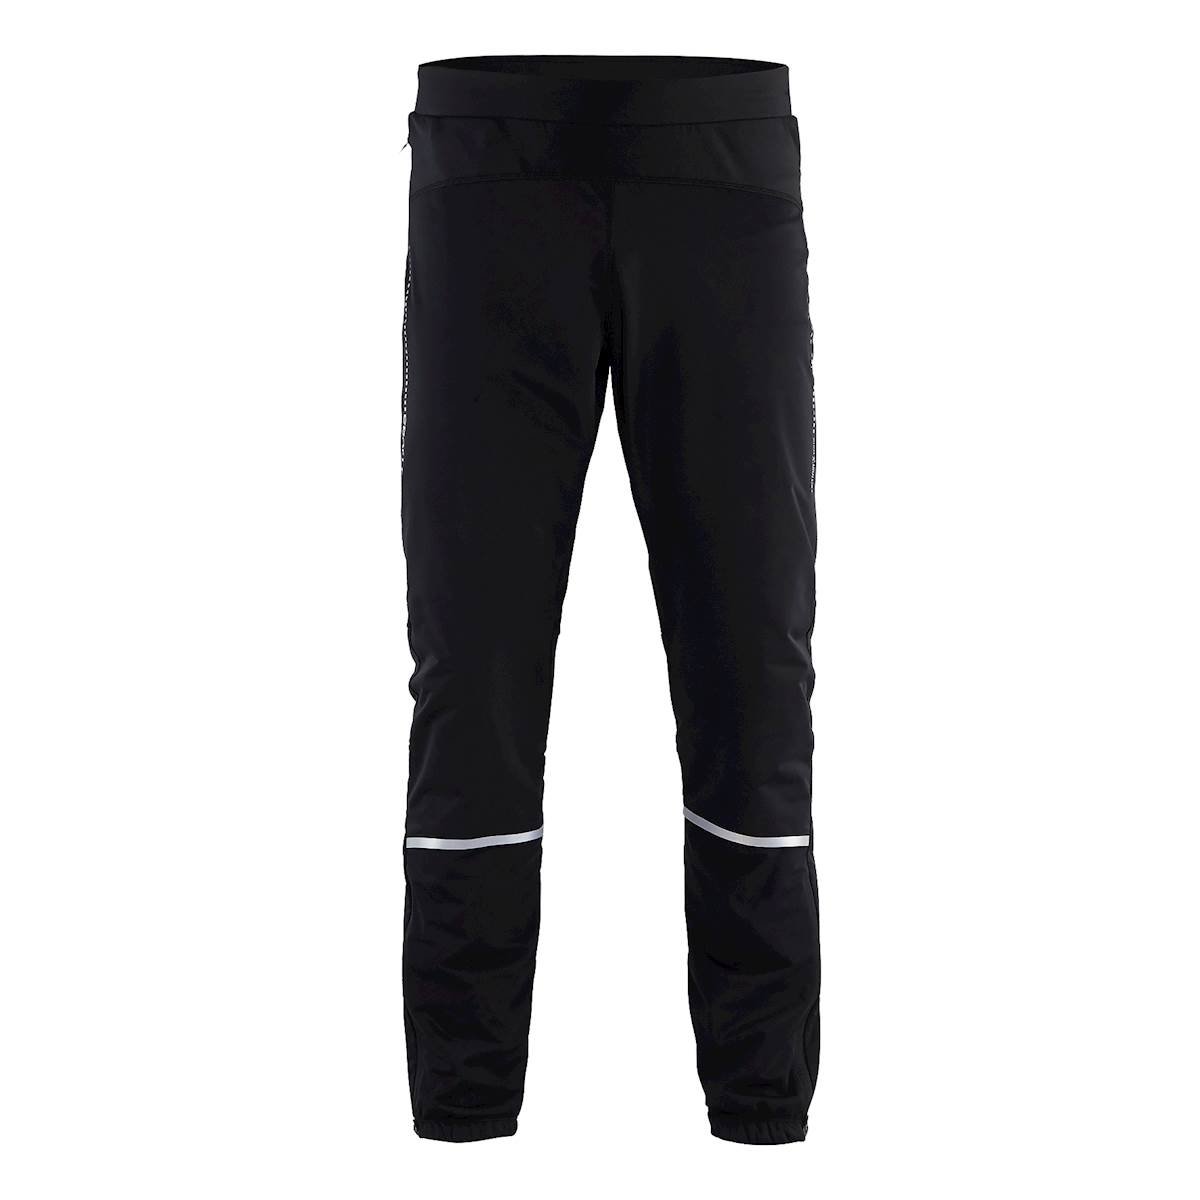 Kalhoty CRAFT ESSENTIAL WINTER - XXL, black